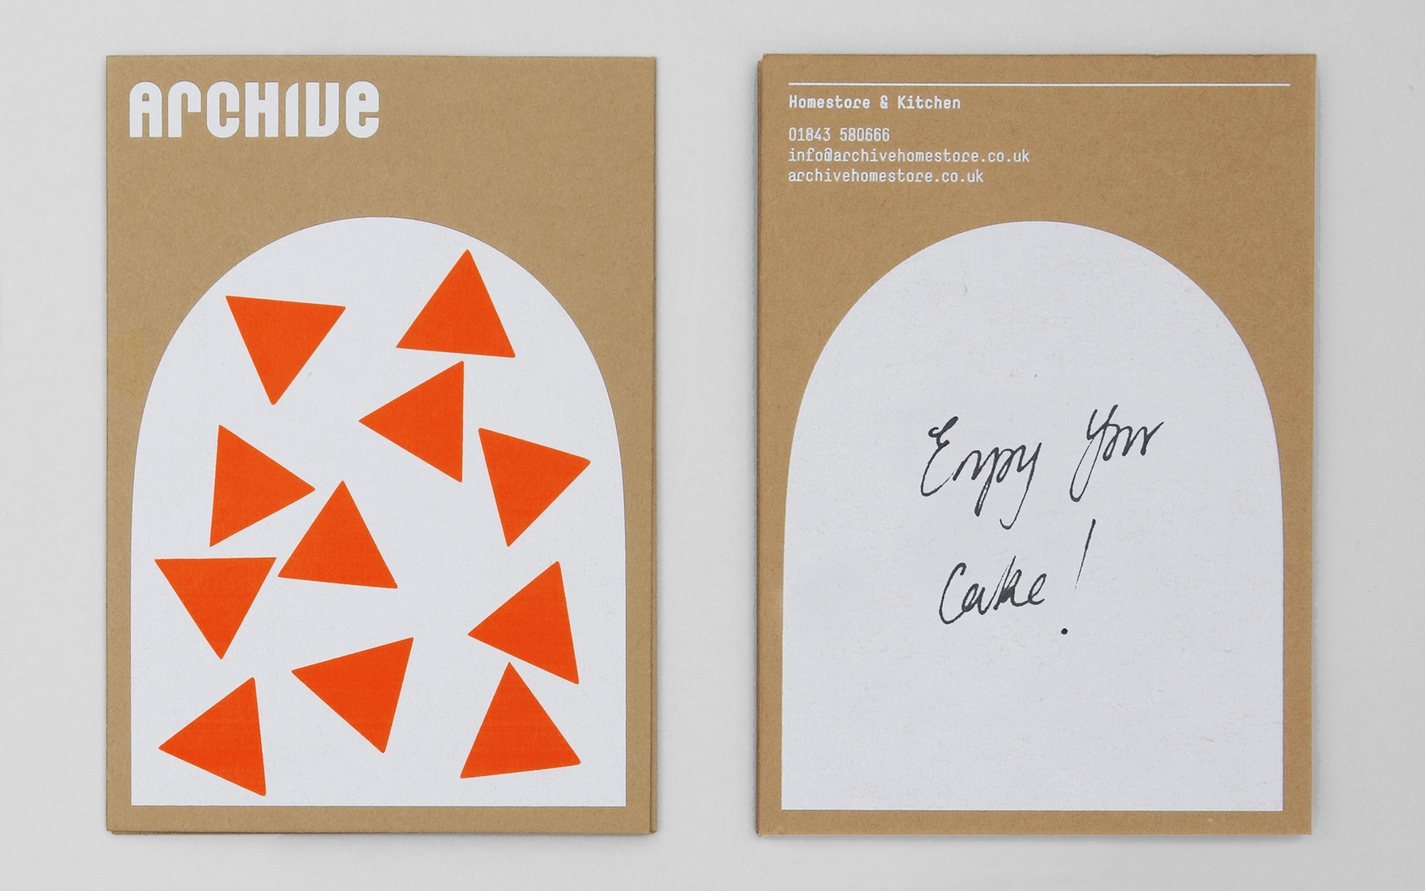 bob-design-archive-two-cards-copy-74266.jpg